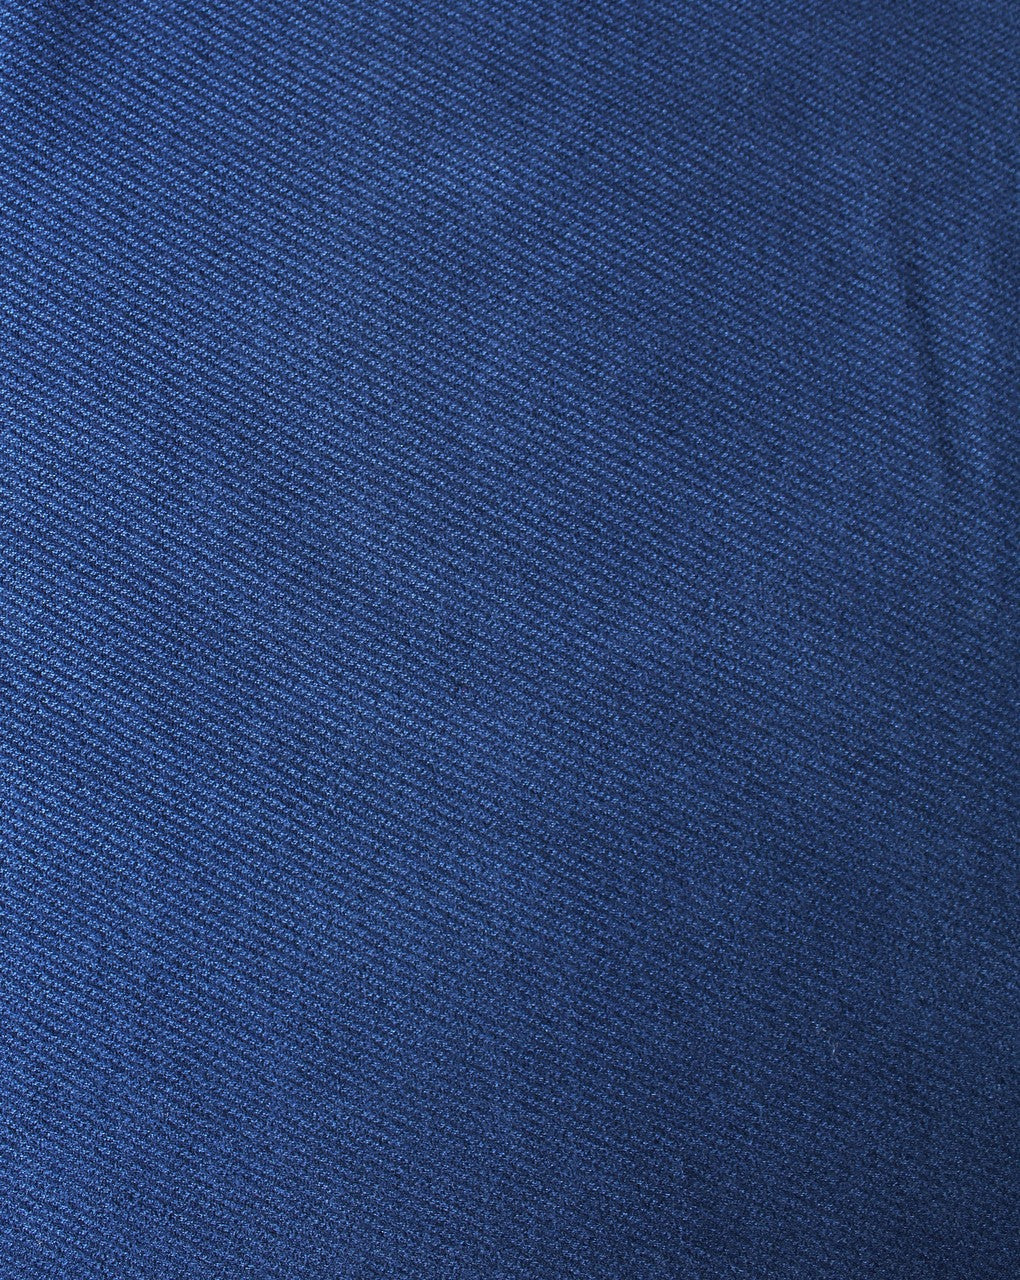 Blue Herringbone Polyester Woolen Fabric